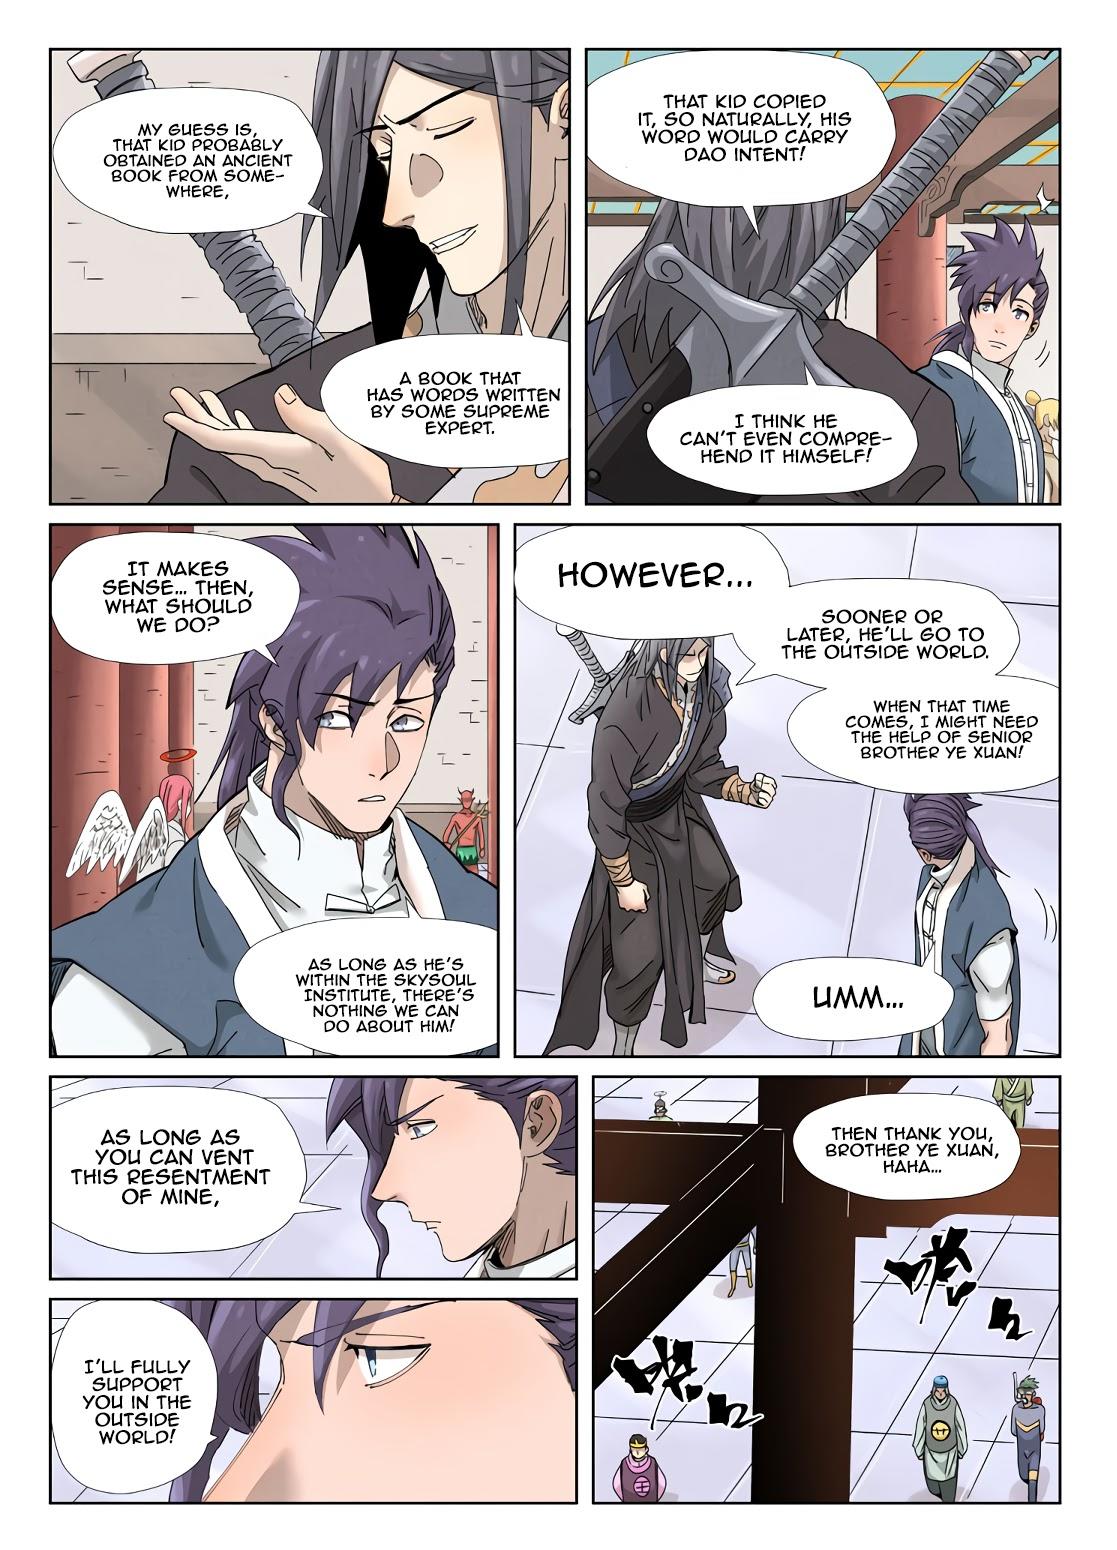 Tales Of Demons And Gods Chapter 343.1 page 6 - Mangakakalot